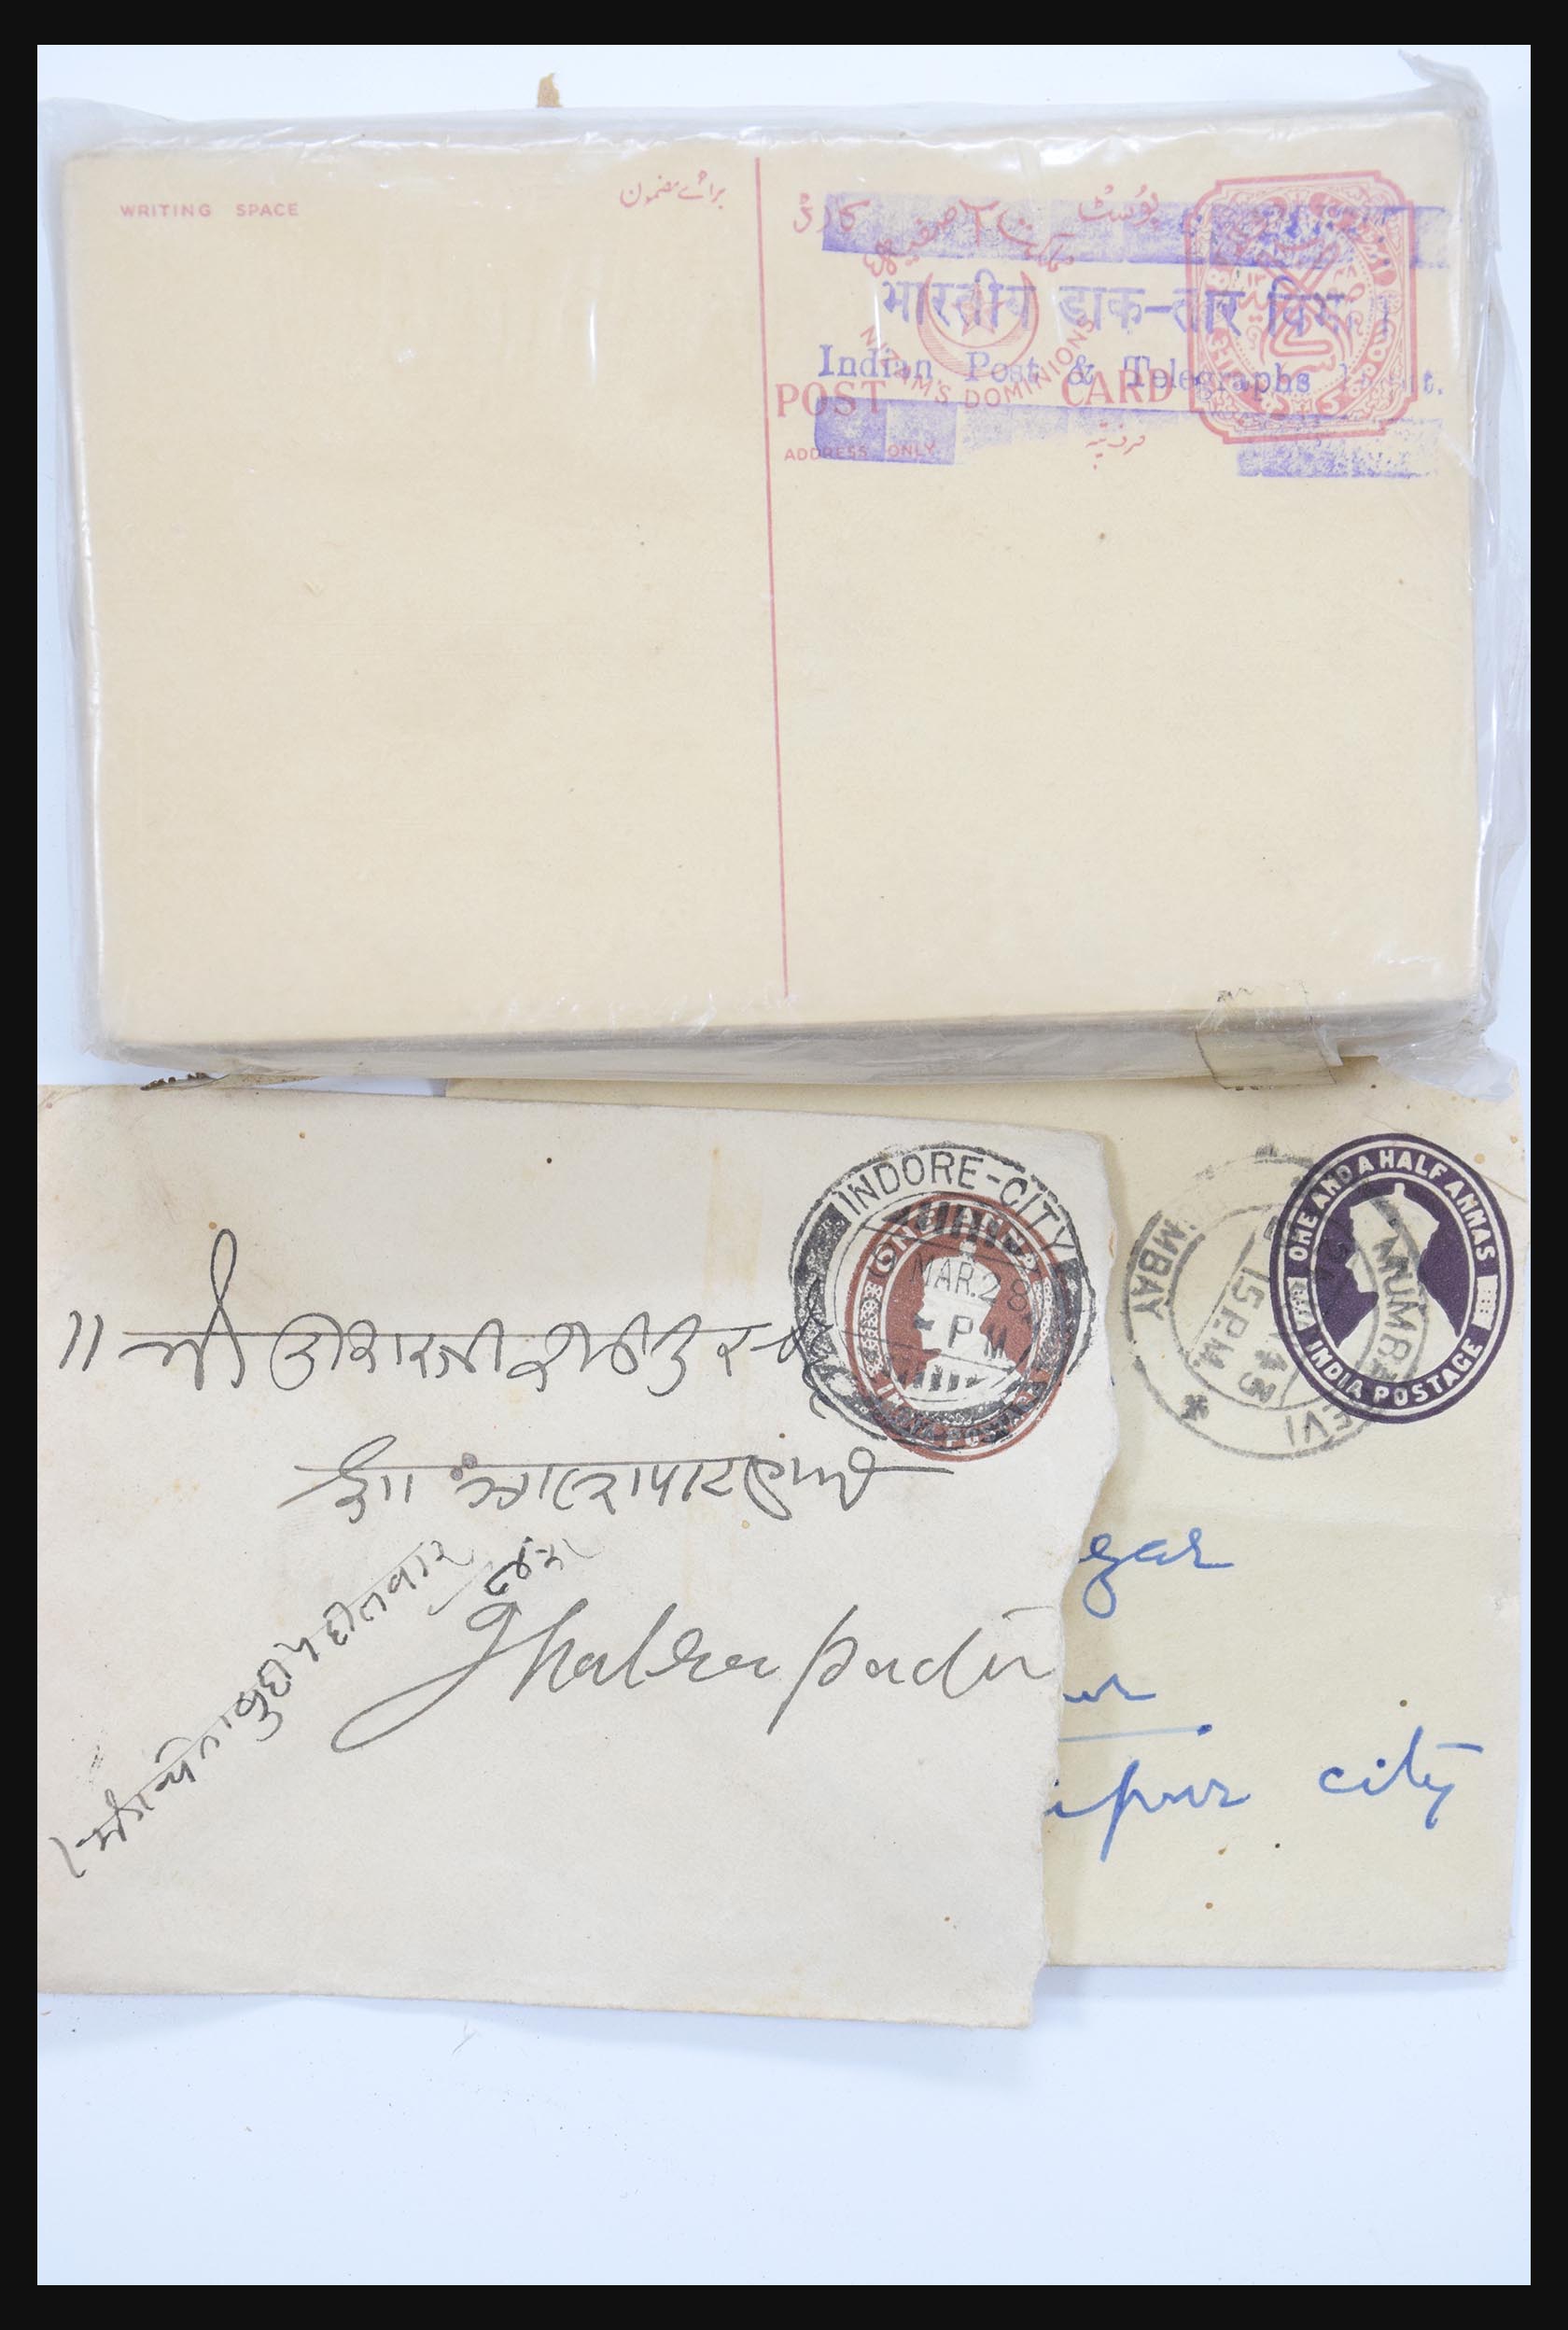 30686 004 - 30686 India en staten brieven 1900-1945.